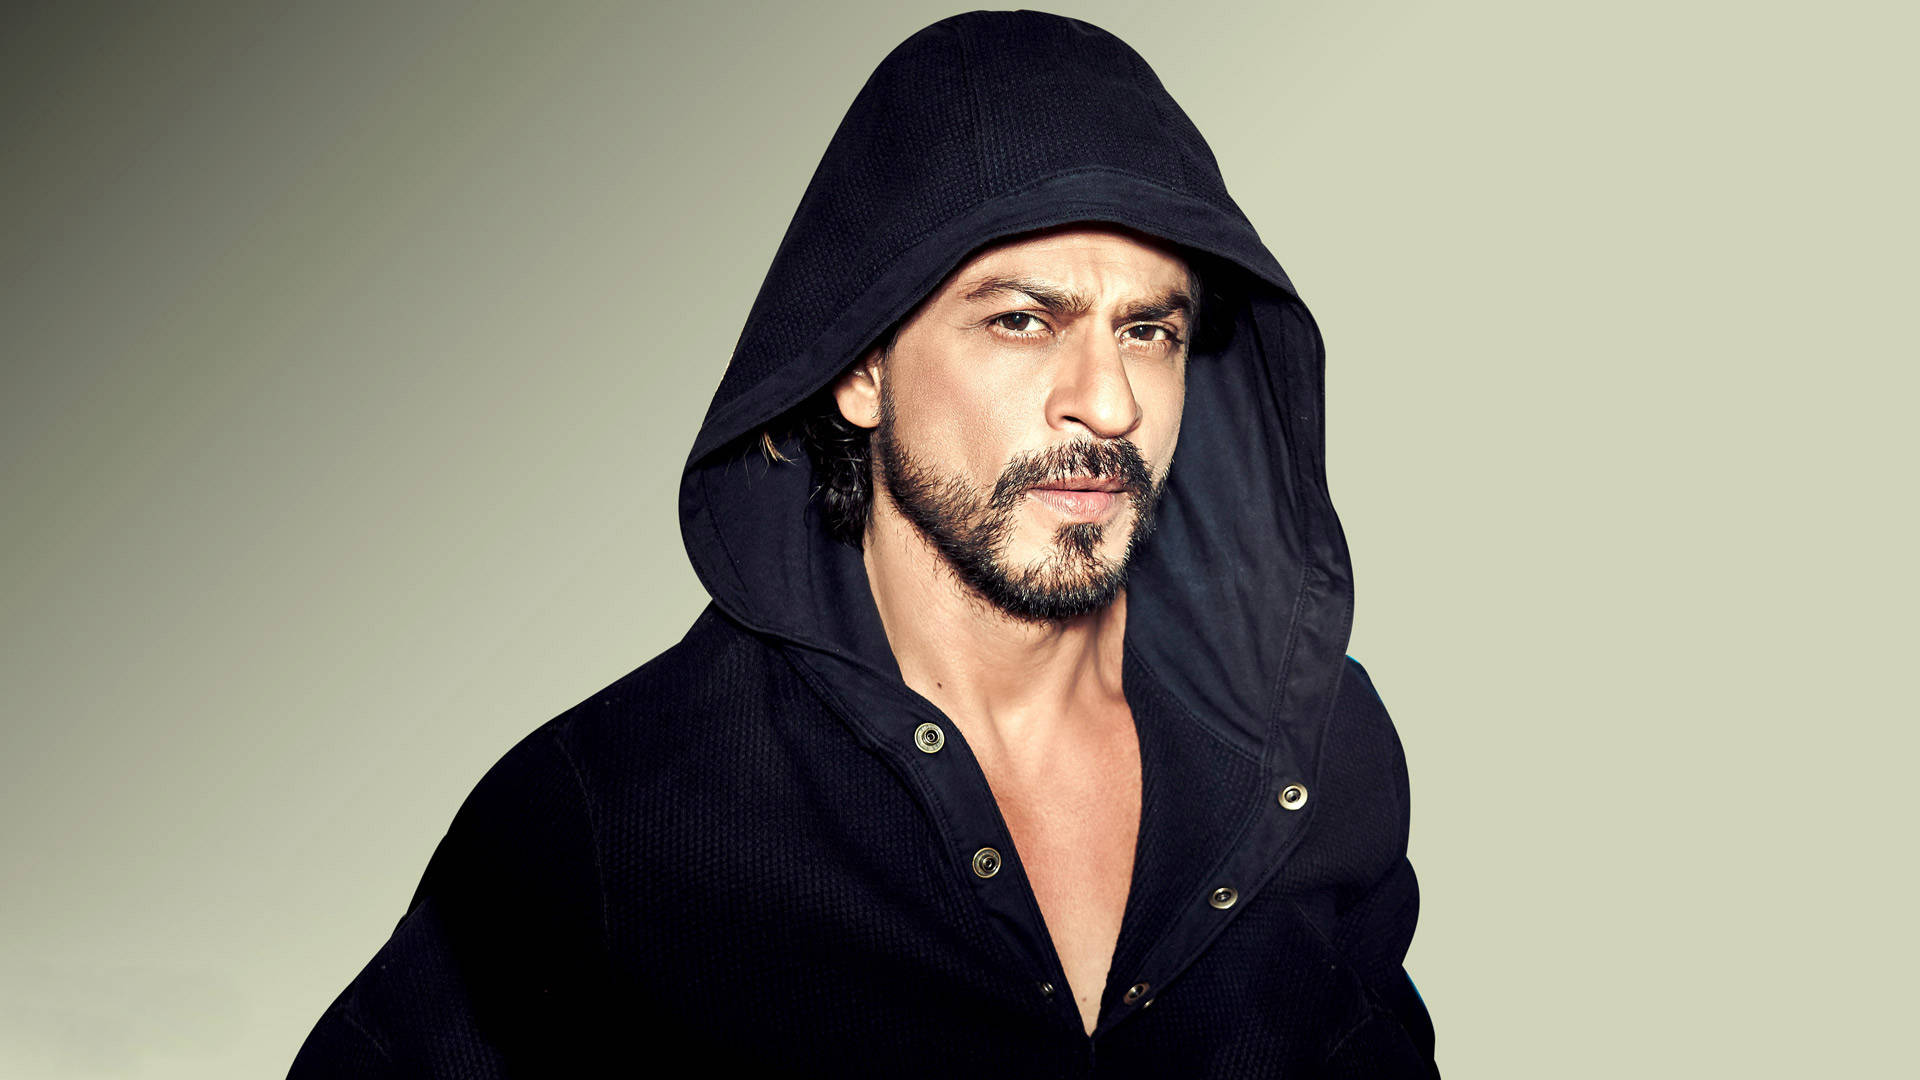 Shahrukh Khan Hd In Hooded Shirt Background